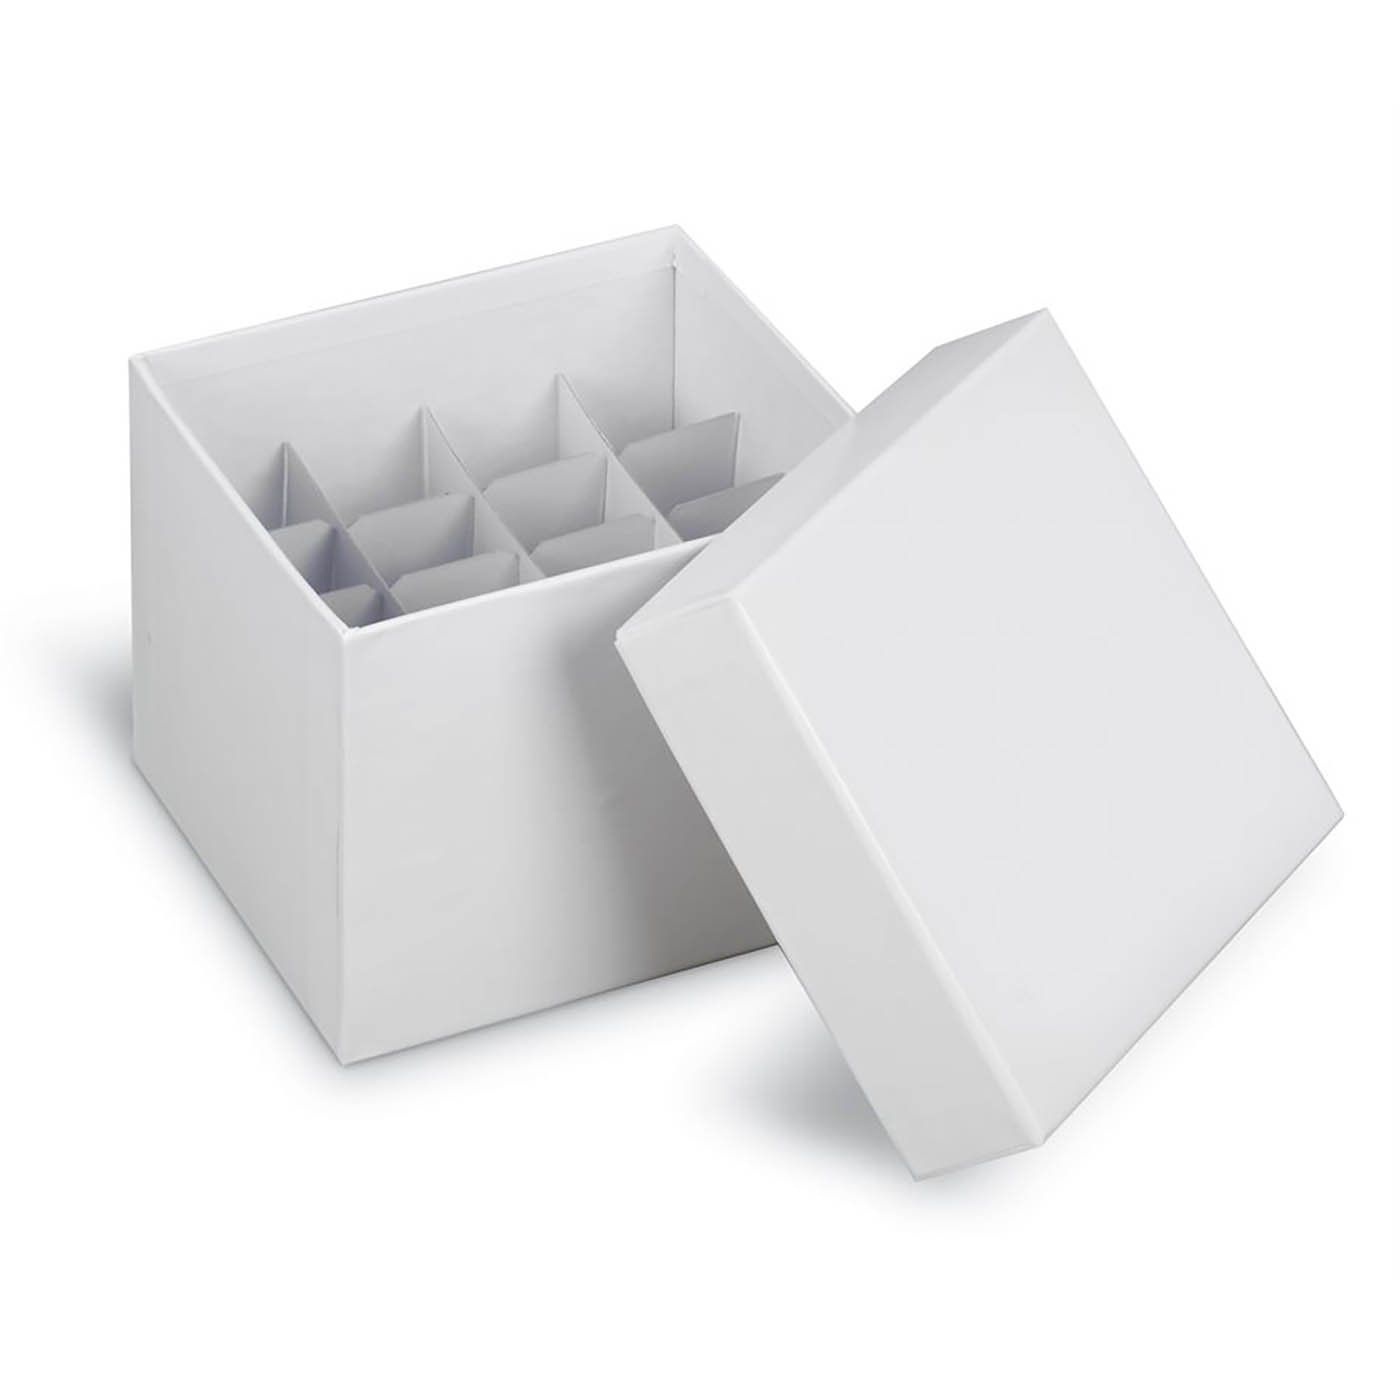 181020 - Cardboard Storage Box with Lid, Standard 2 Inch, 5 1/4 x 5 1/4 x 1  7/8 Inches